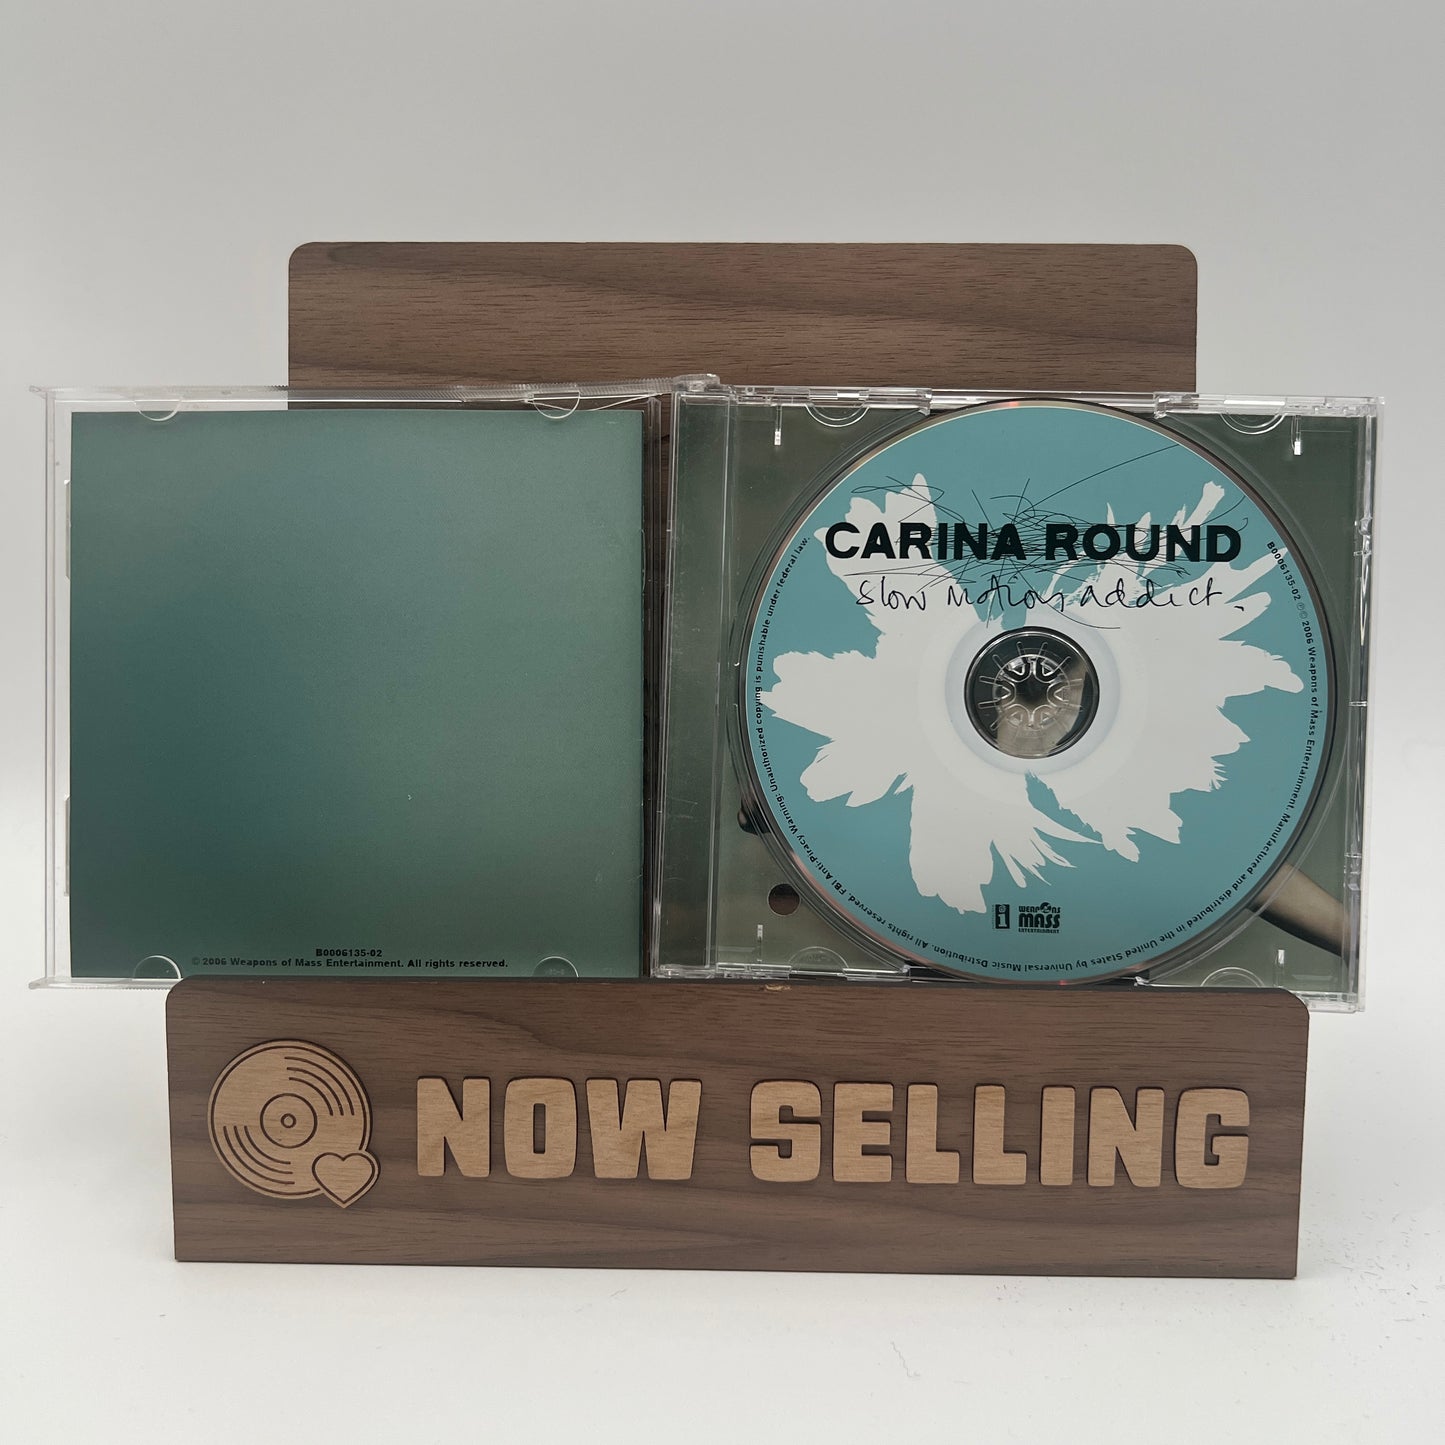 Carina Round - Slow Motion Addict CD Sampler SIGNED